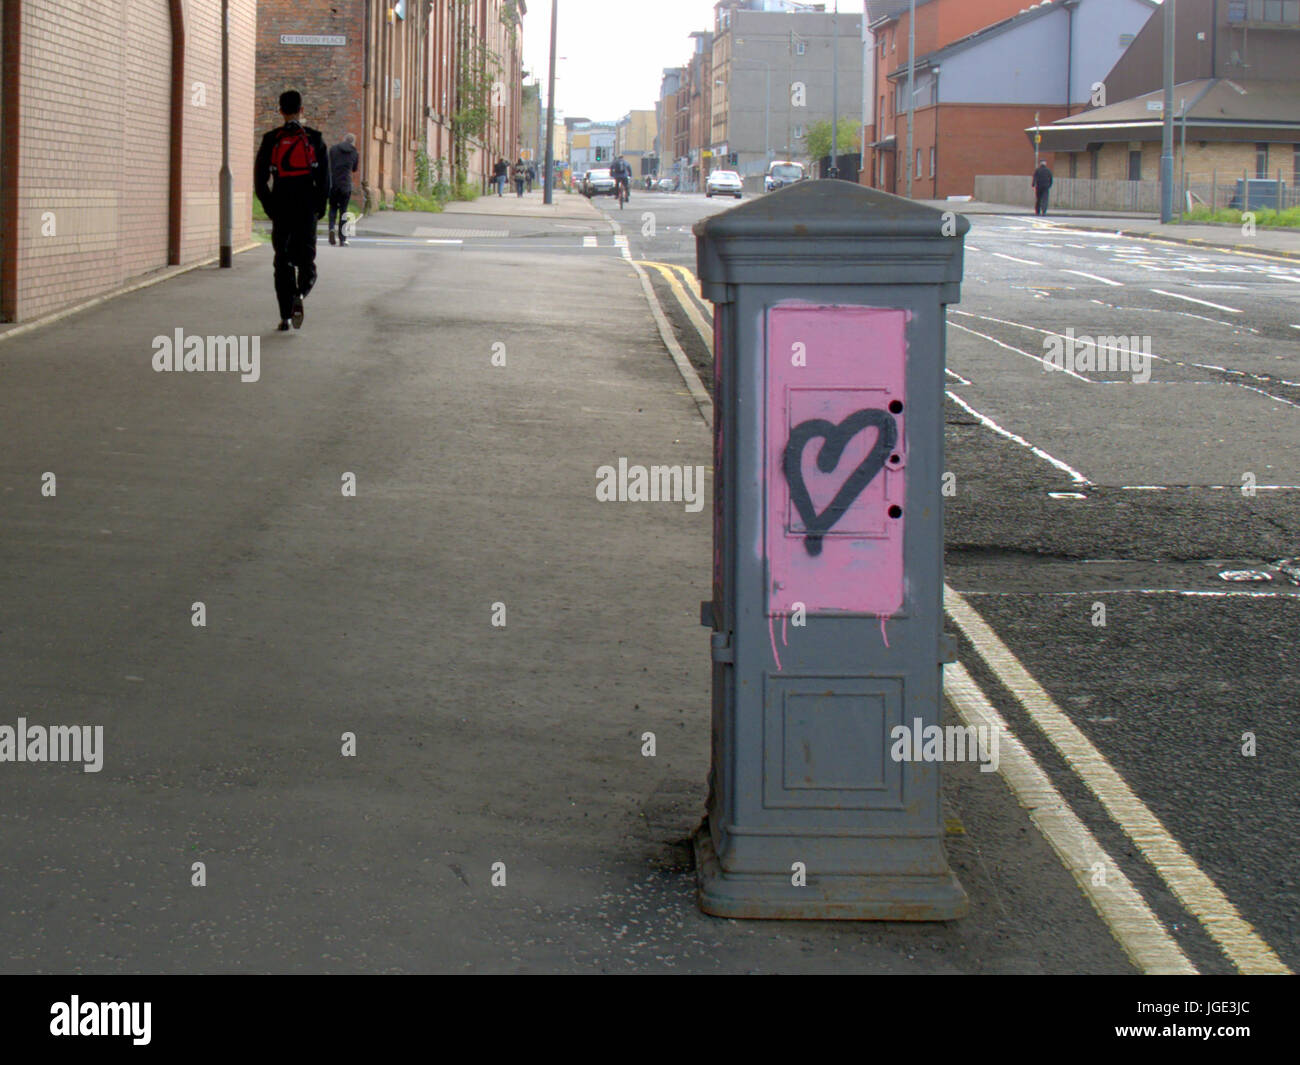 Glasgow street graffiti pink heart with pedestrians Stock Photo